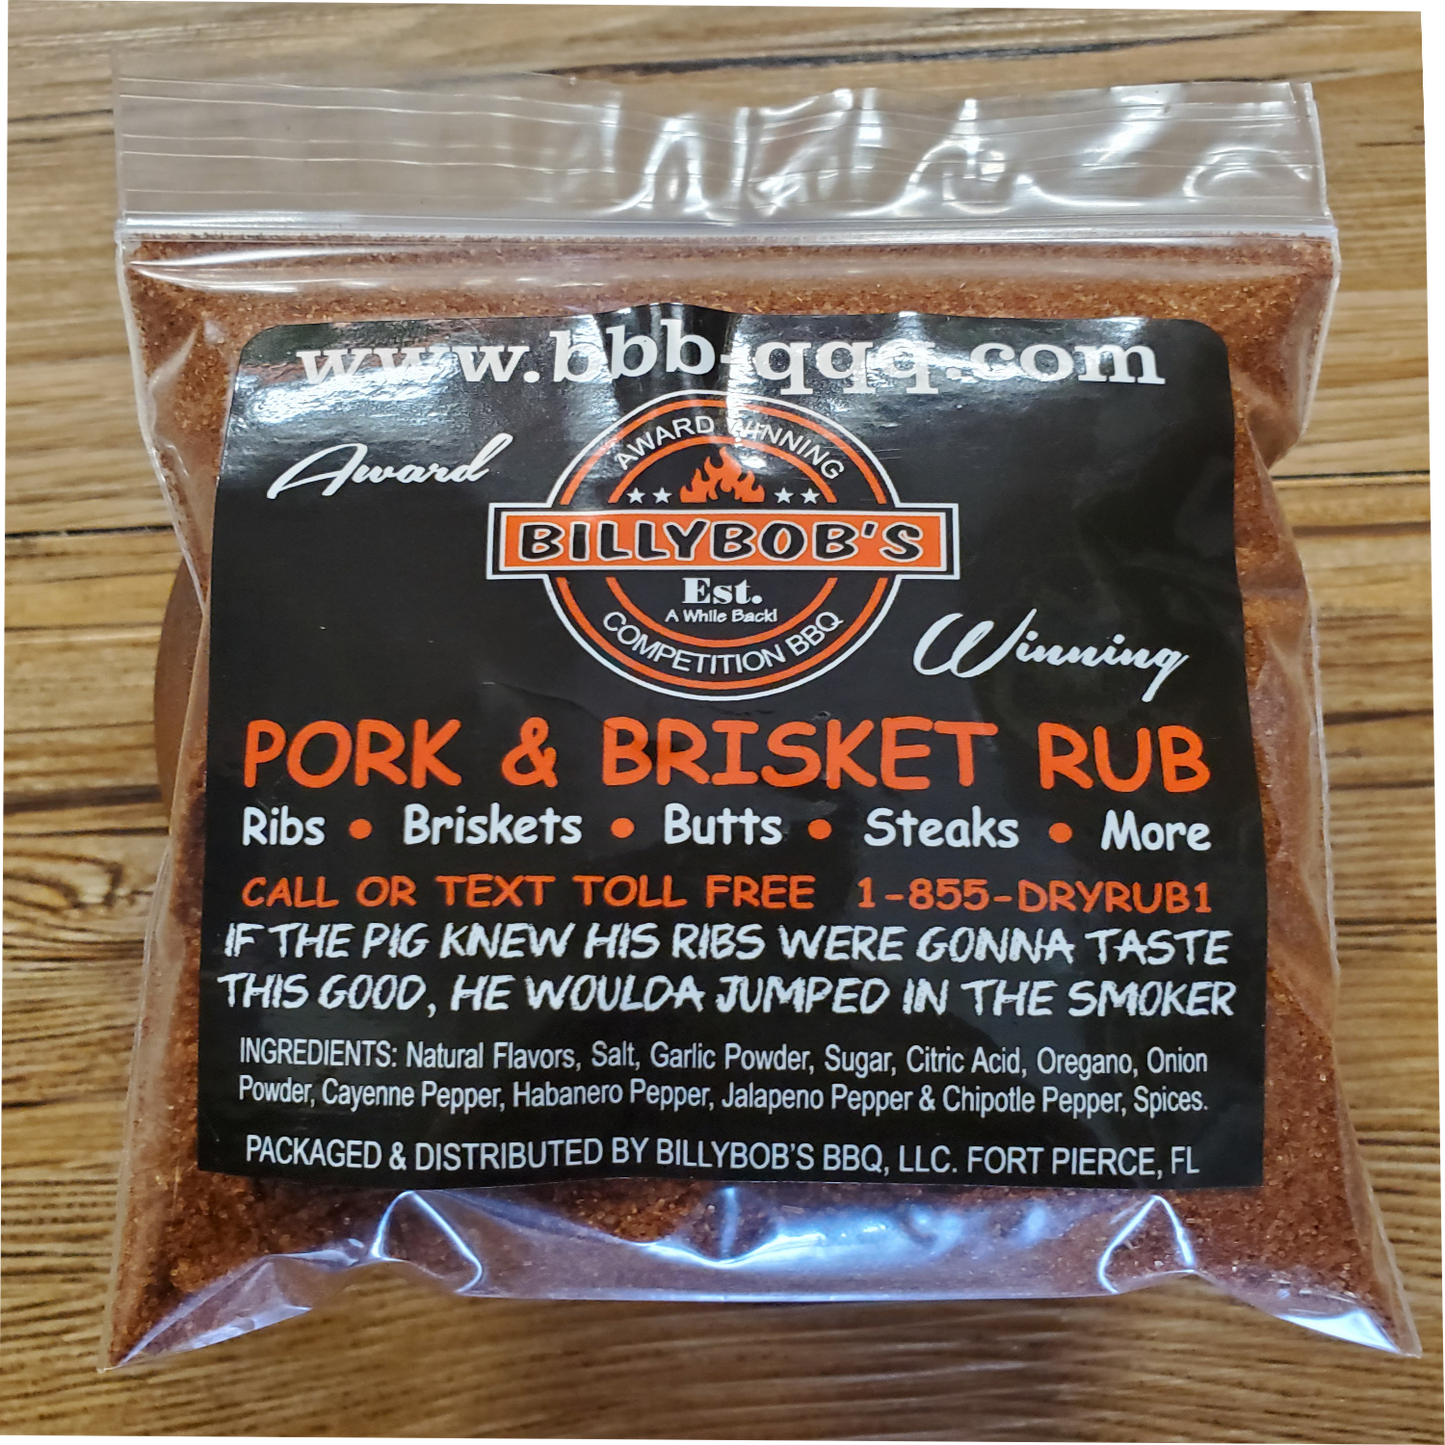 (BB0) Free Sample BillyBob's Pork & Brisket Rub (Discount applied at Checkout)